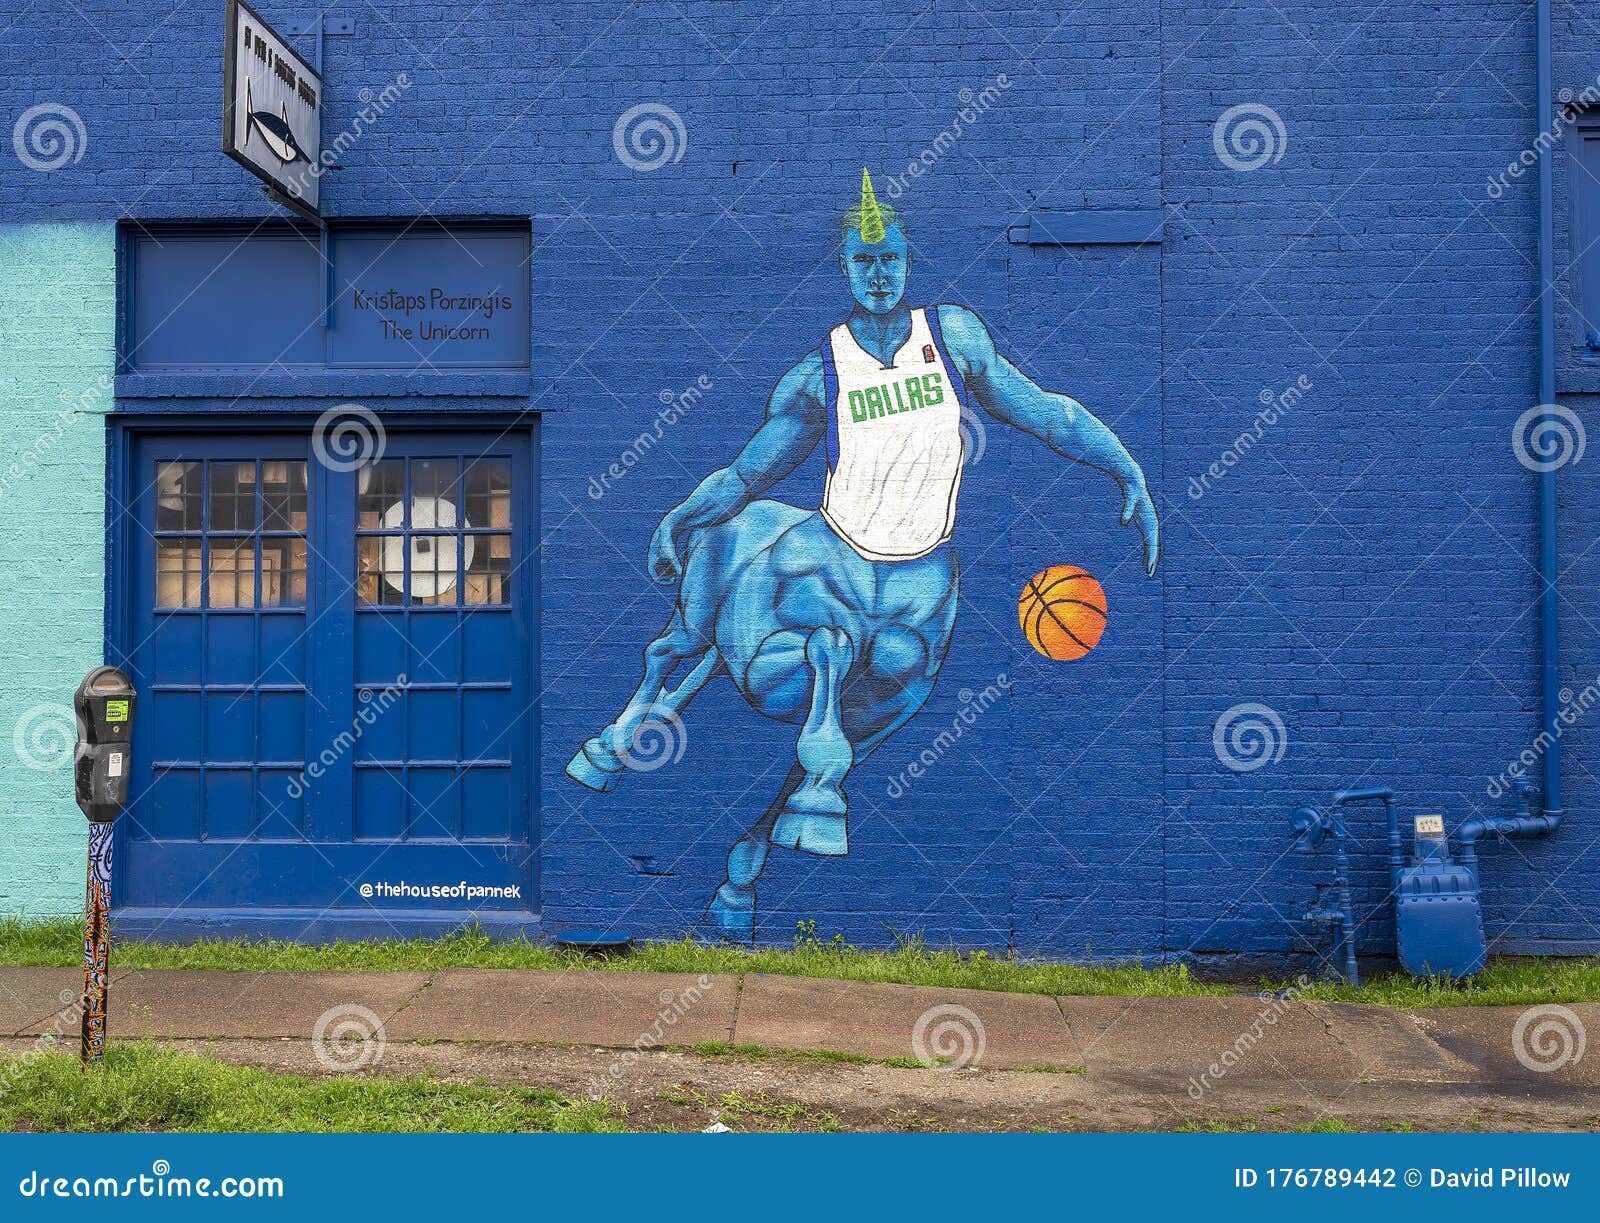 mural in deep ellum featuring dallas mavericks basketball star kristaps porzingis, nicknamed the unicorn.